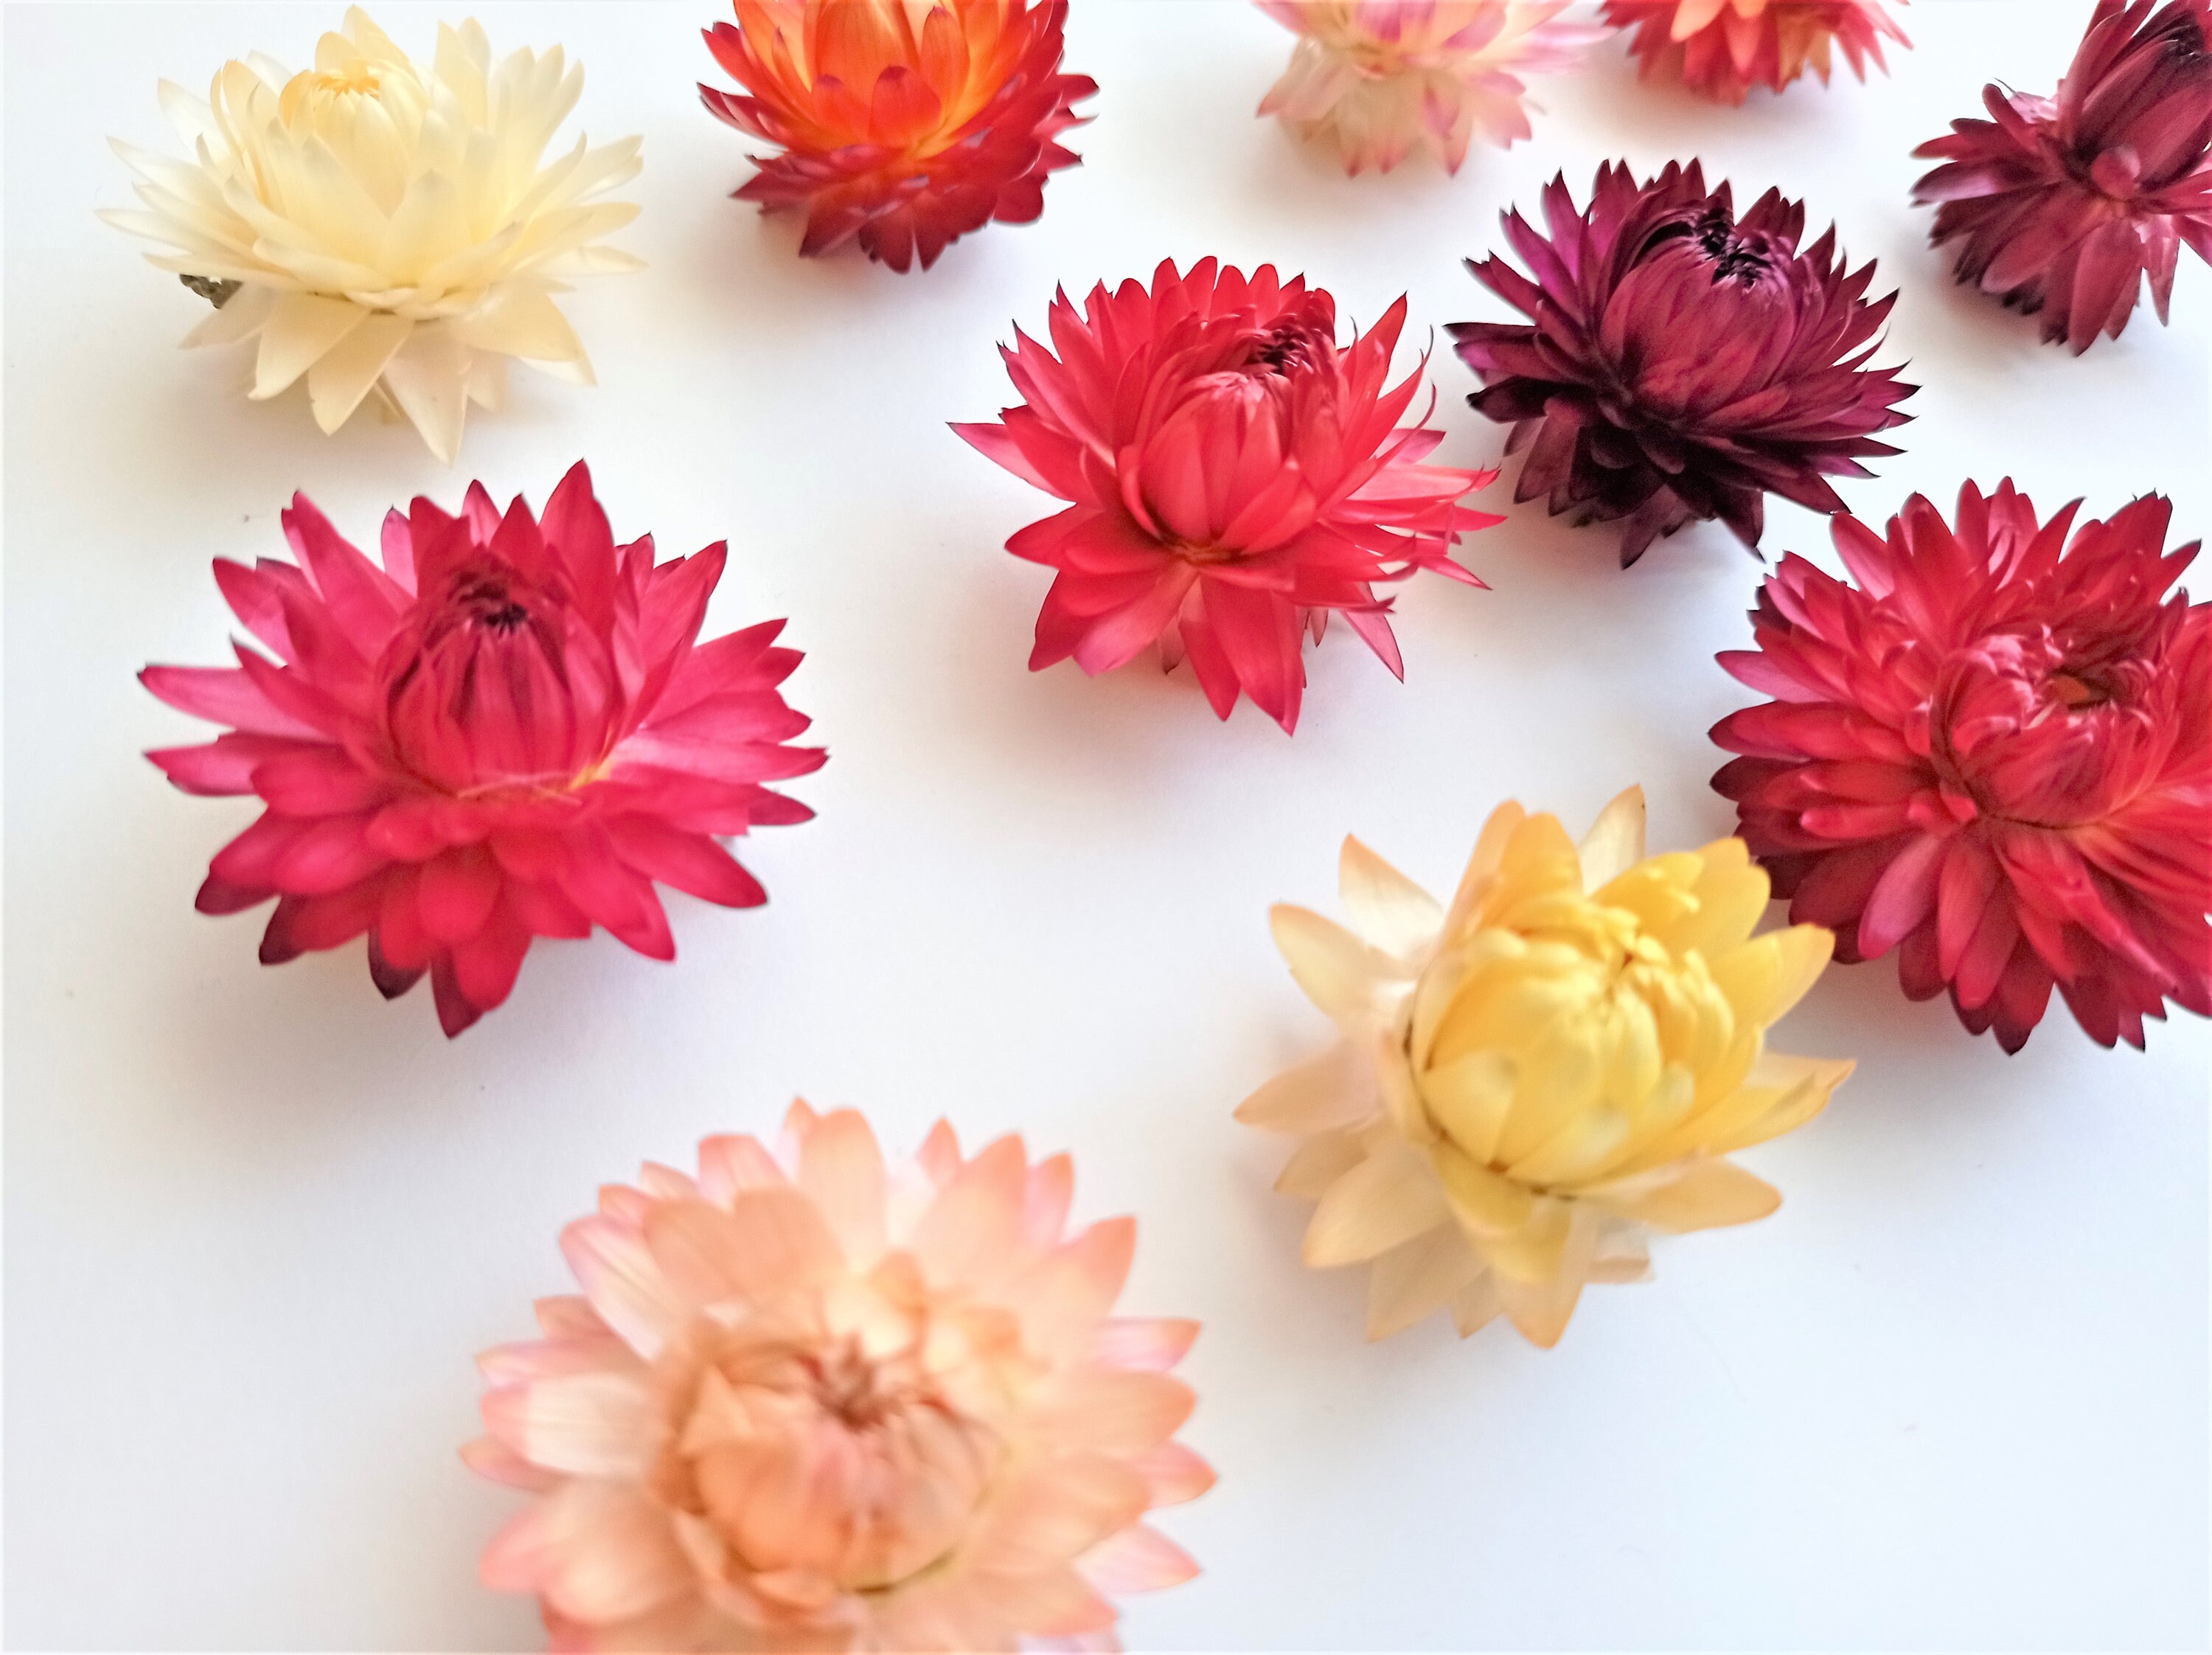 Strawflowers (Helichrysum) - Pink - Dried Flowers Forever - DIY